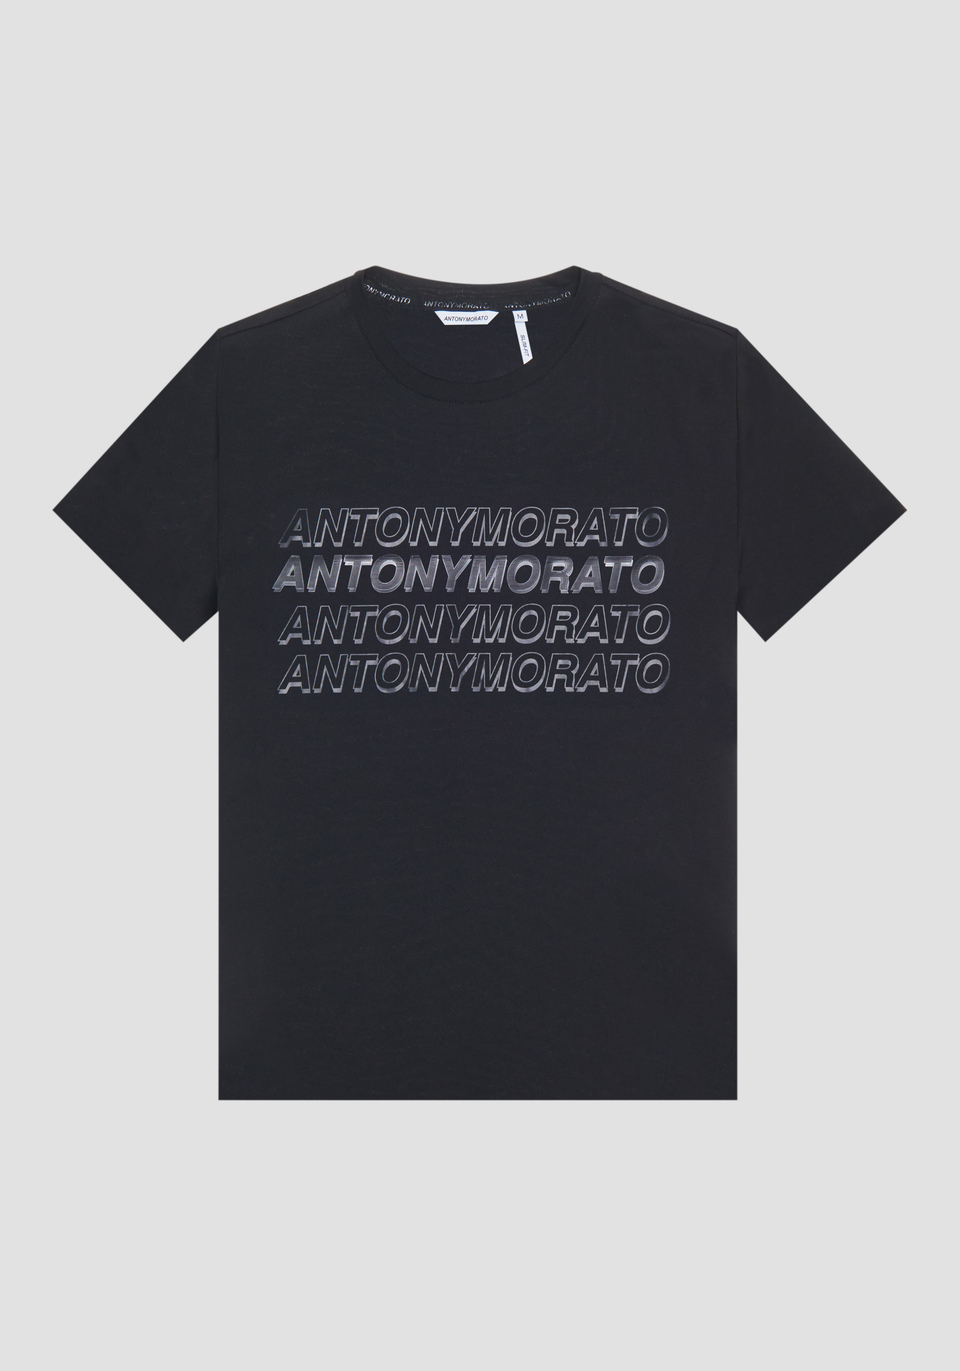 T-SHIRT SLIM FIT IN PURO COTONE CON STAMPA LOGO - Antony Morato Online Shop